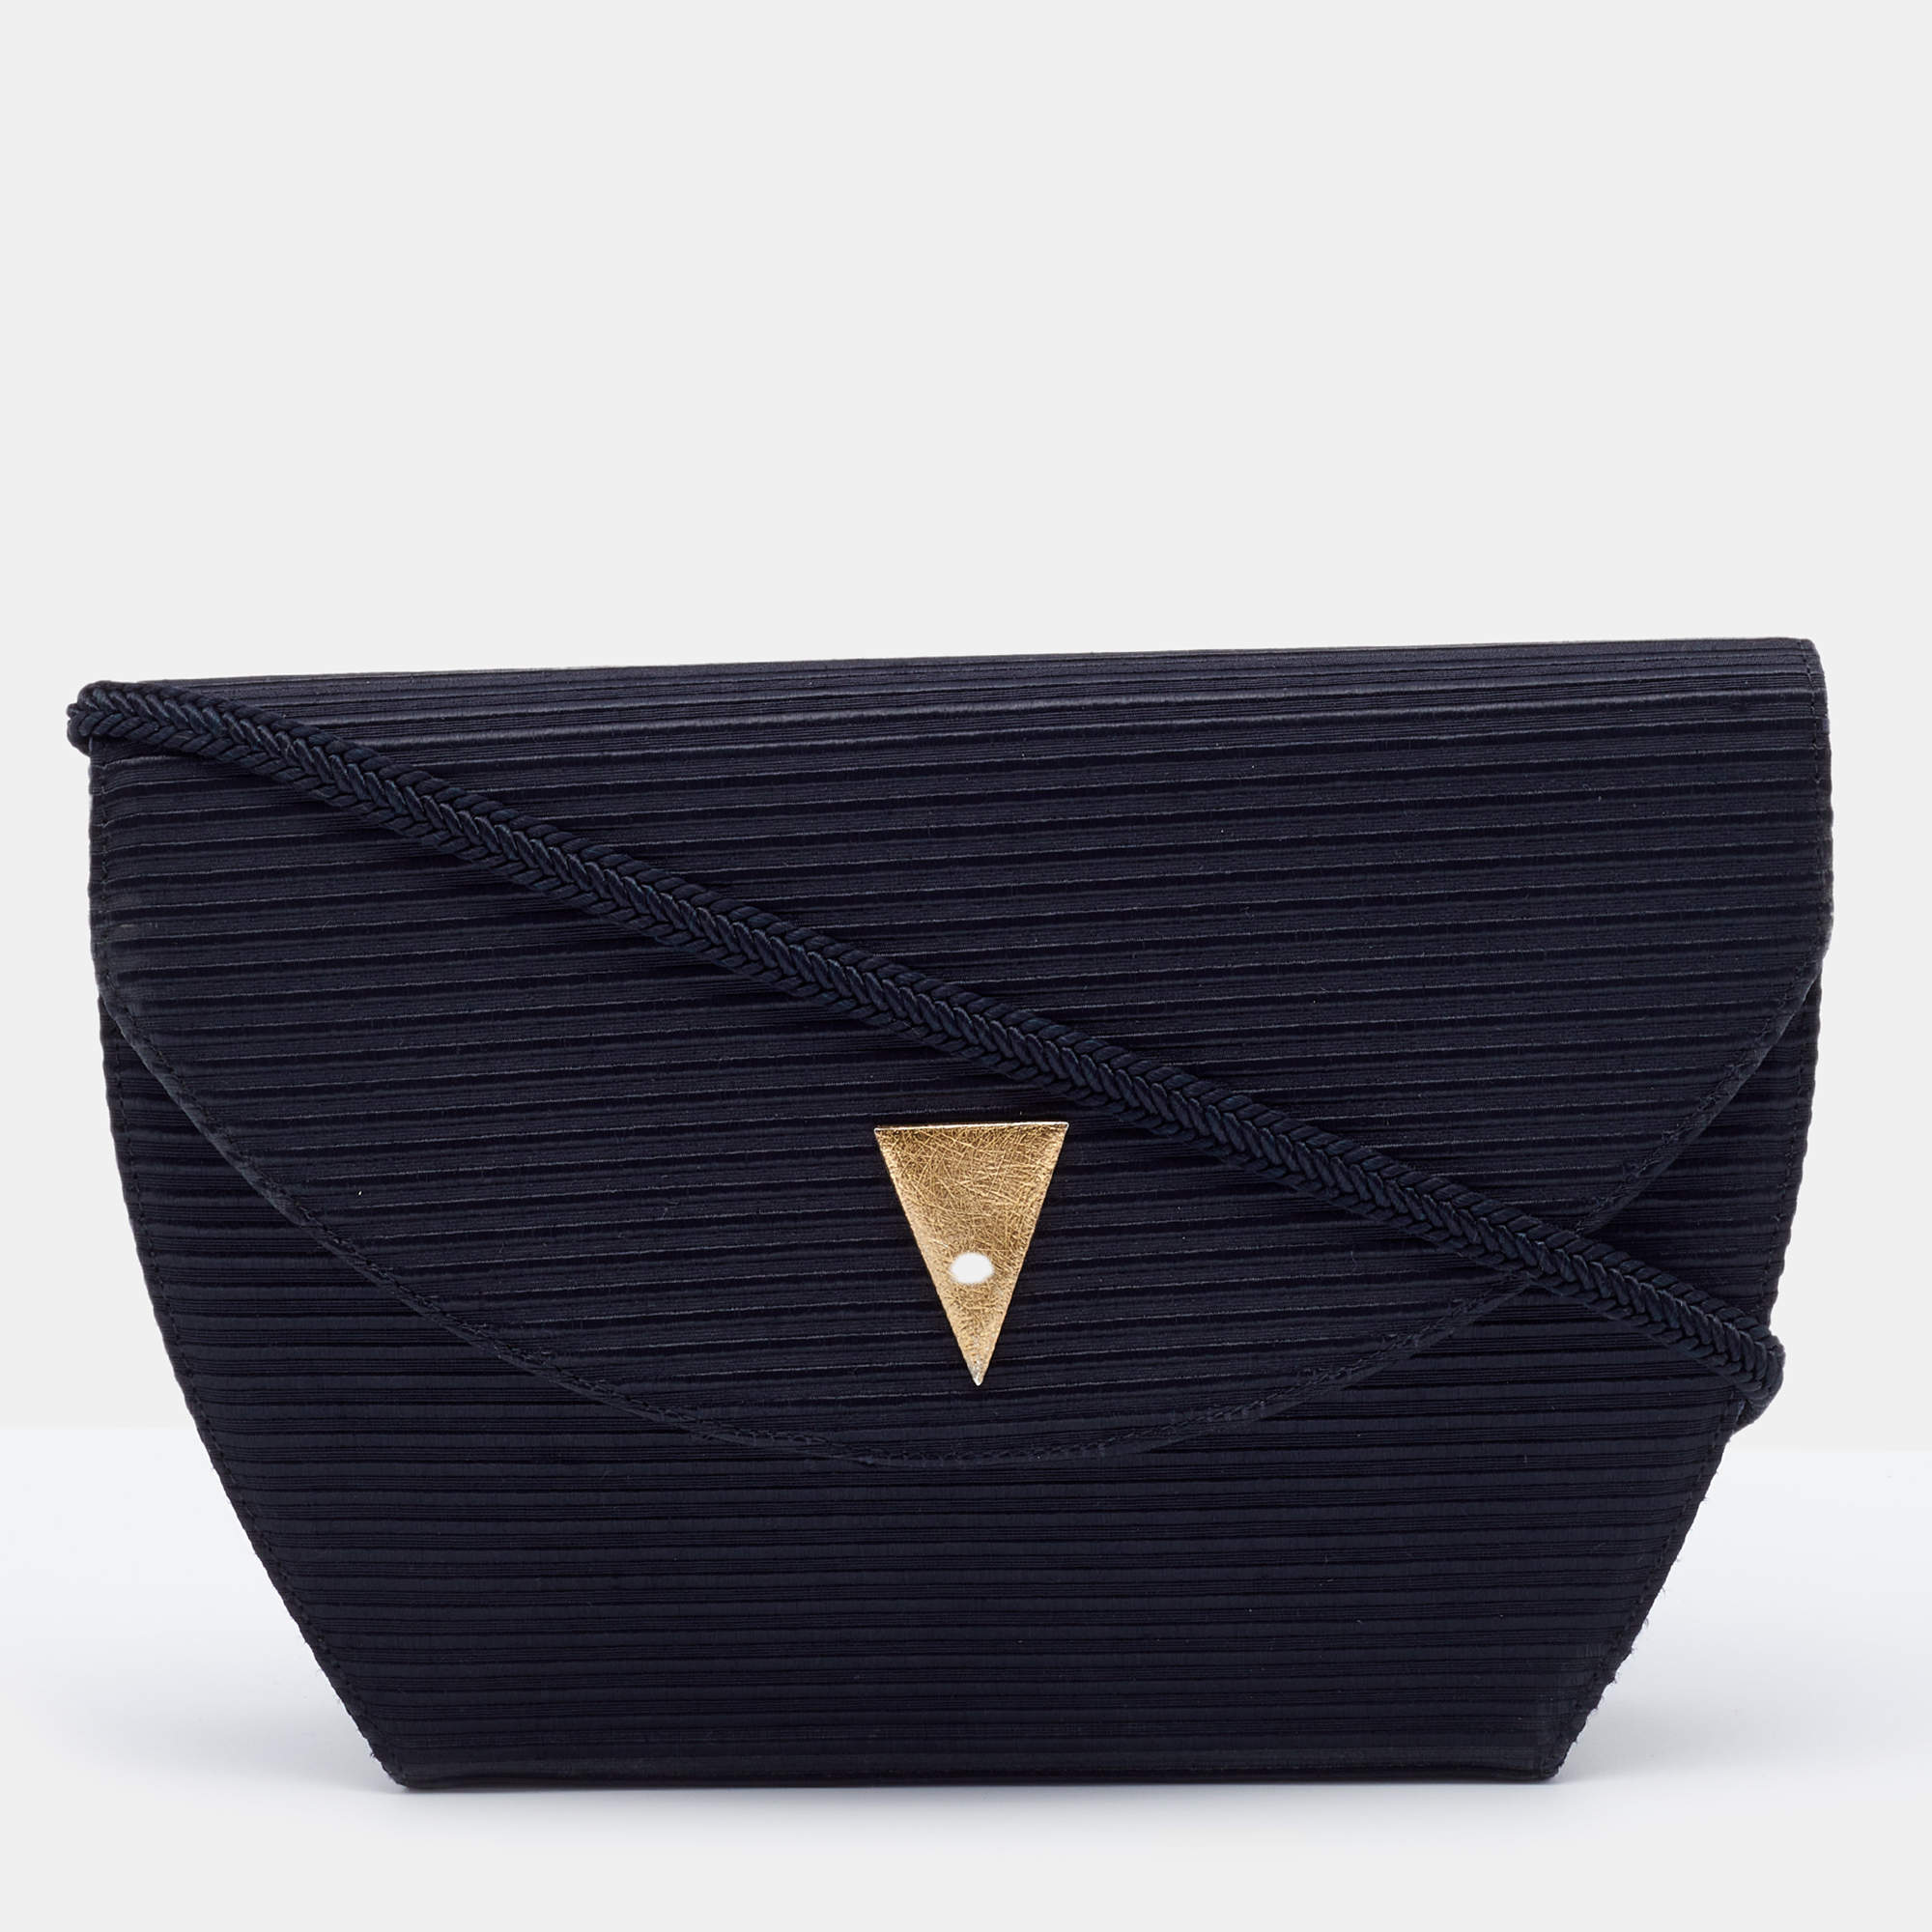 Yves Saint Laurent Black Fabric Shoulder Bag